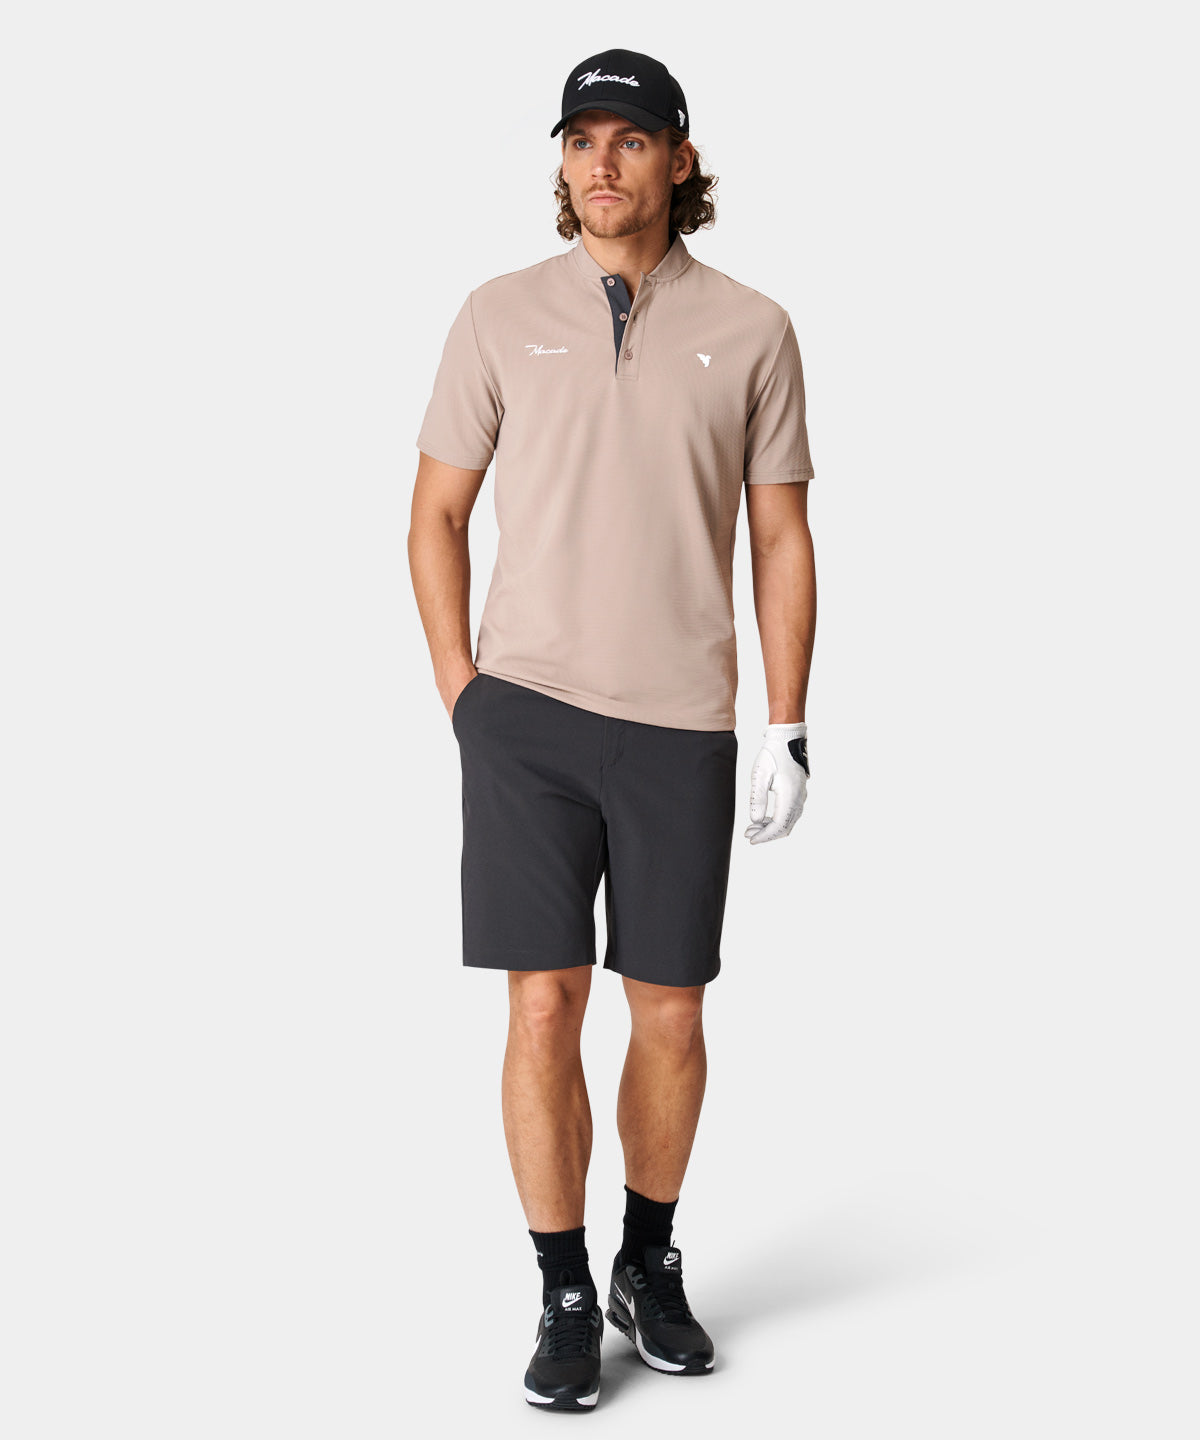 Heath Tan Bomber Shirt - Macade Golf